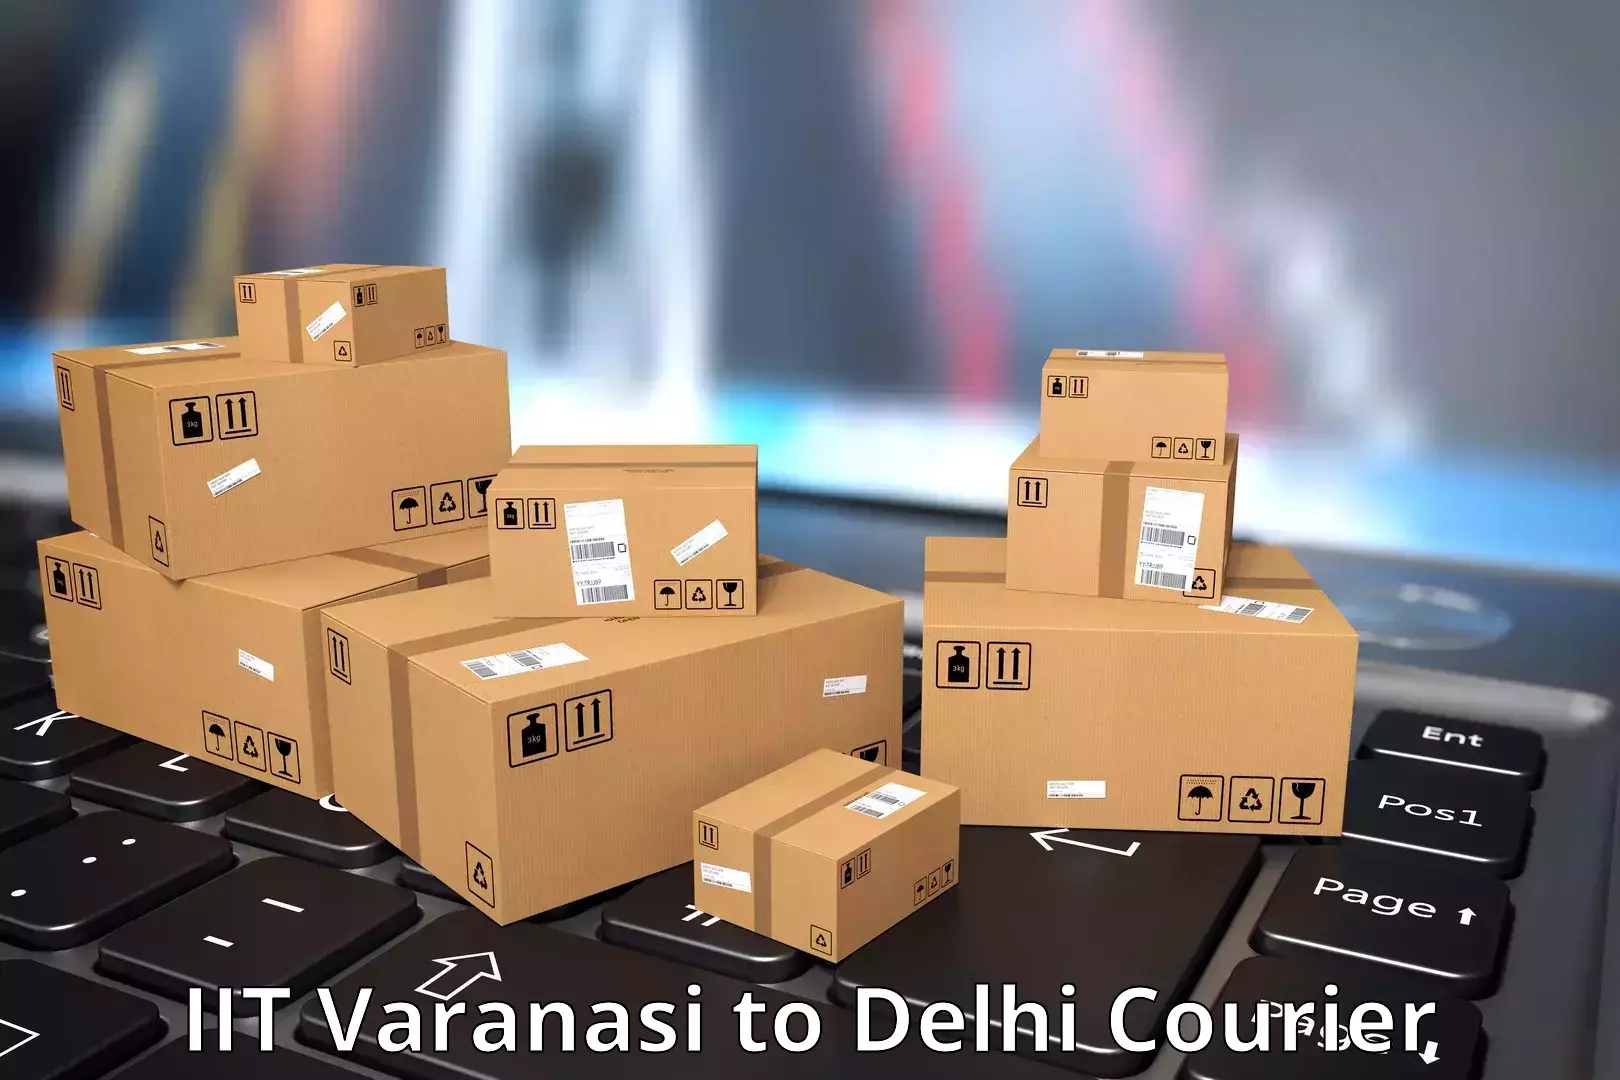 On-call courier service IIT Varanasi to University of Delhi